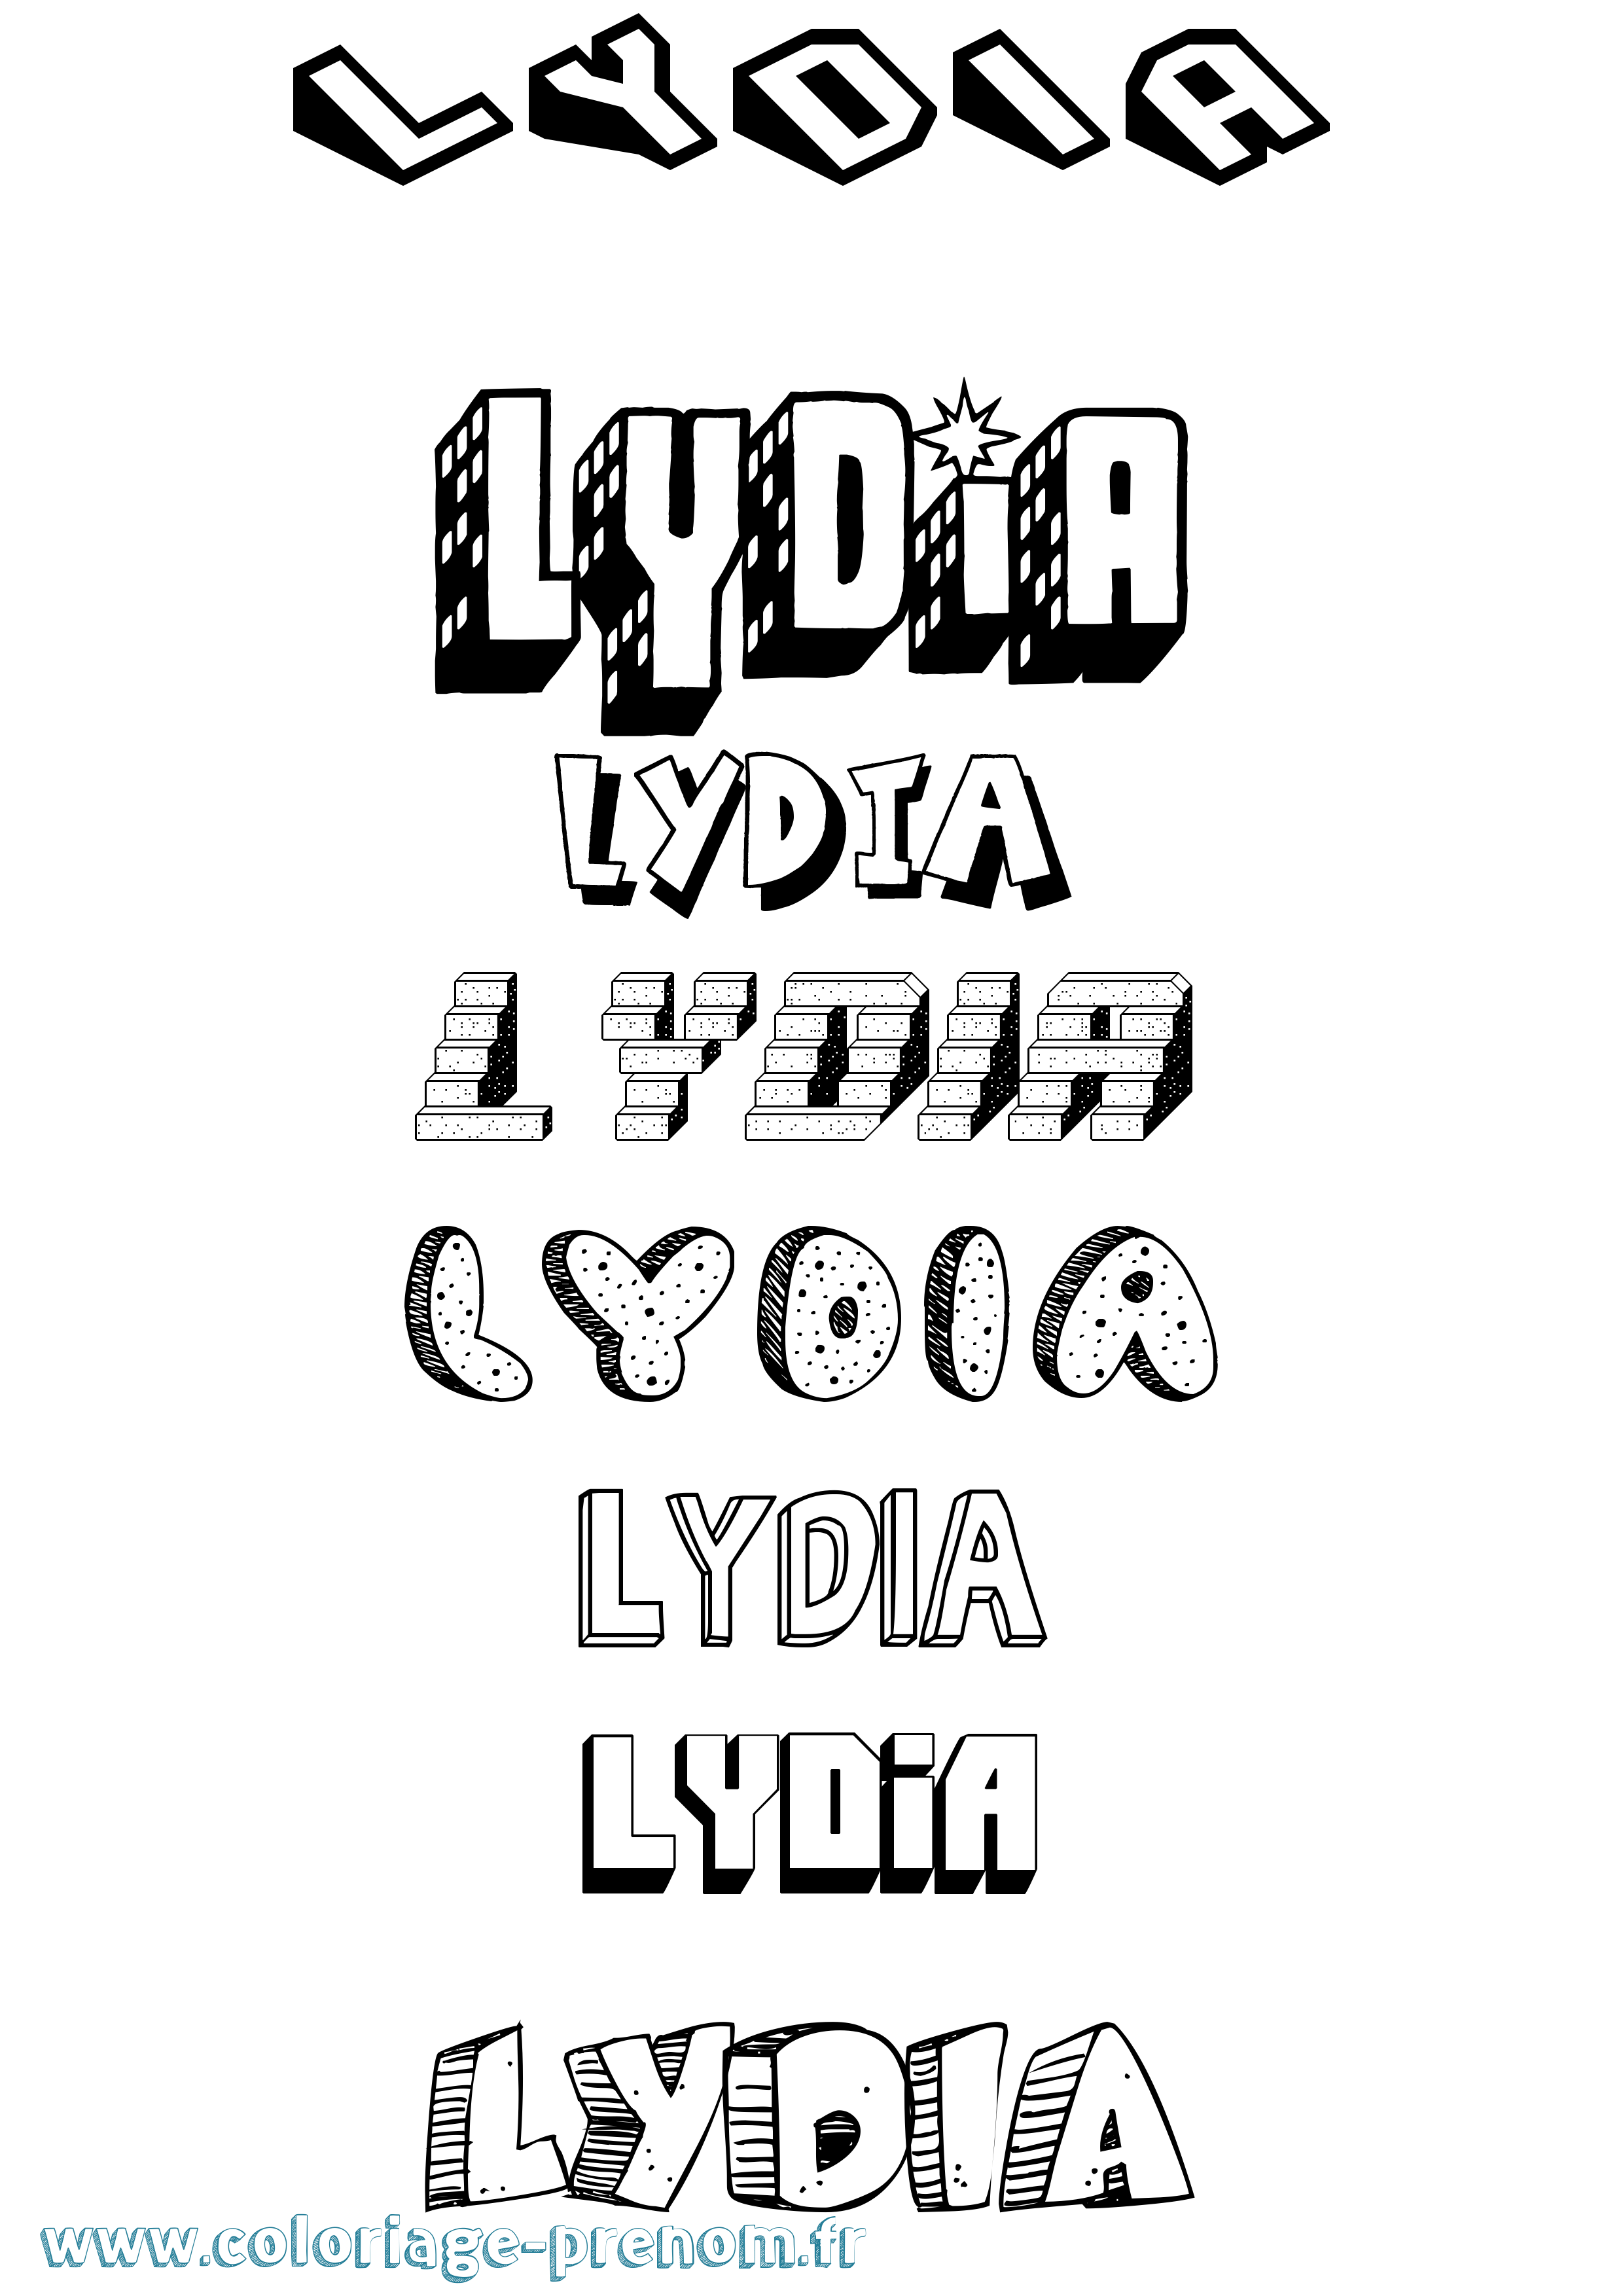 Coloriage prénom Lydia